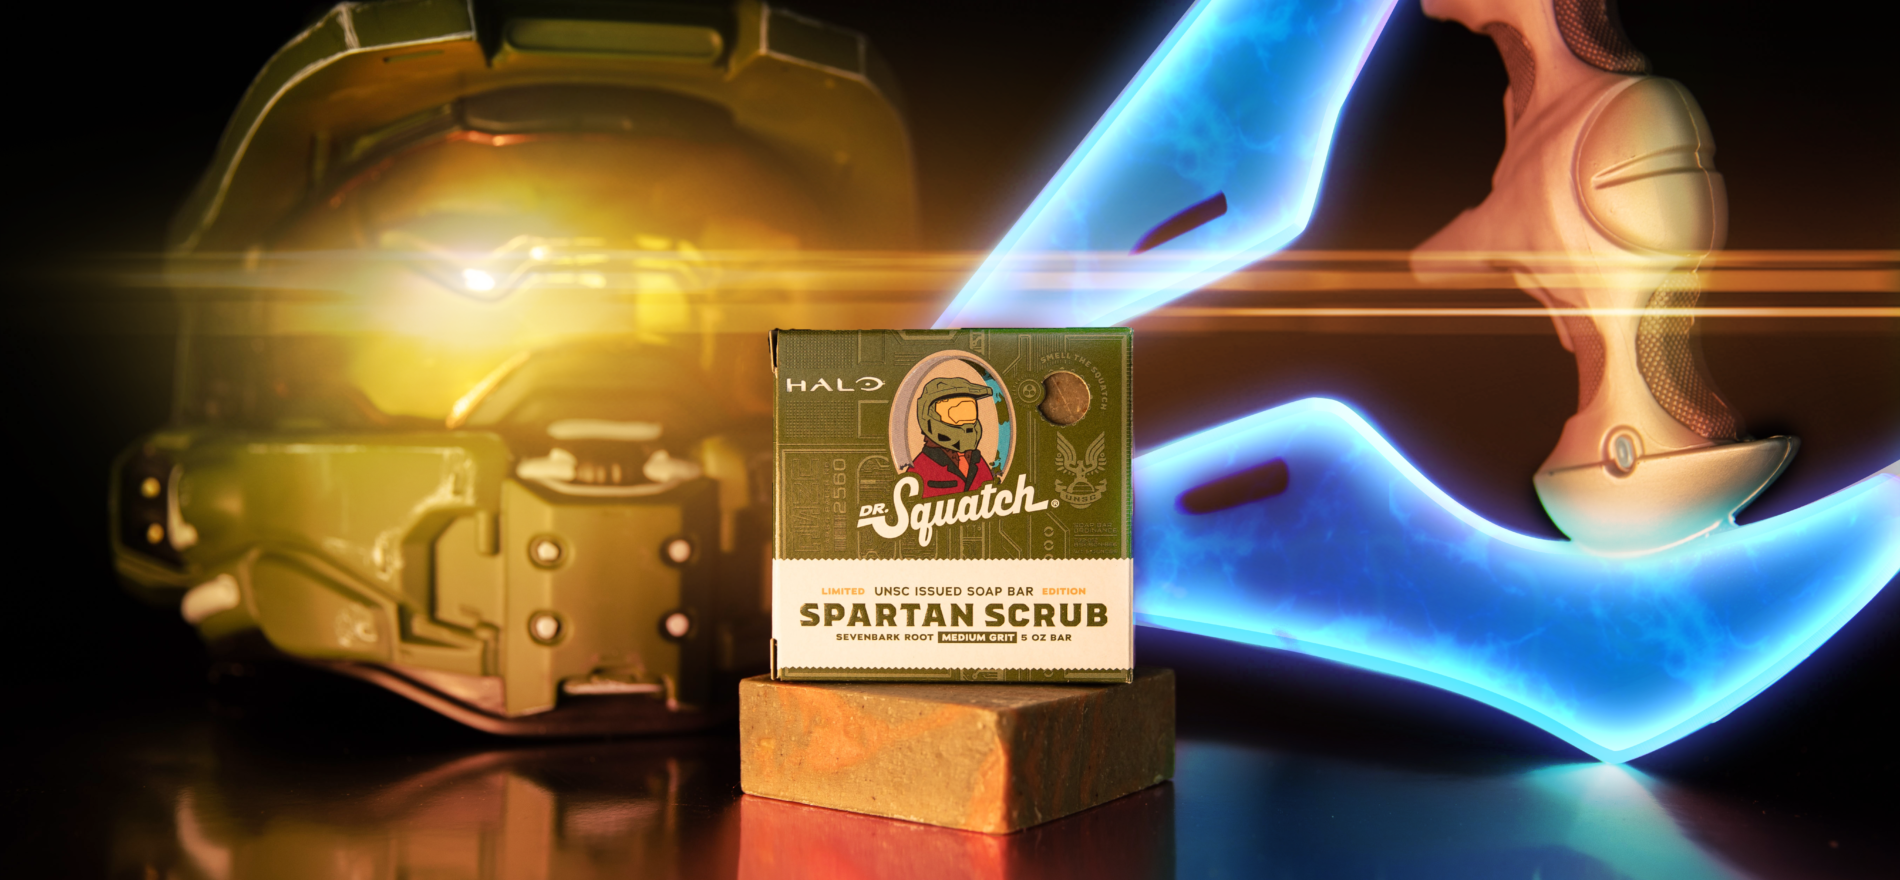 Scrub Smash - Dr. Squatch